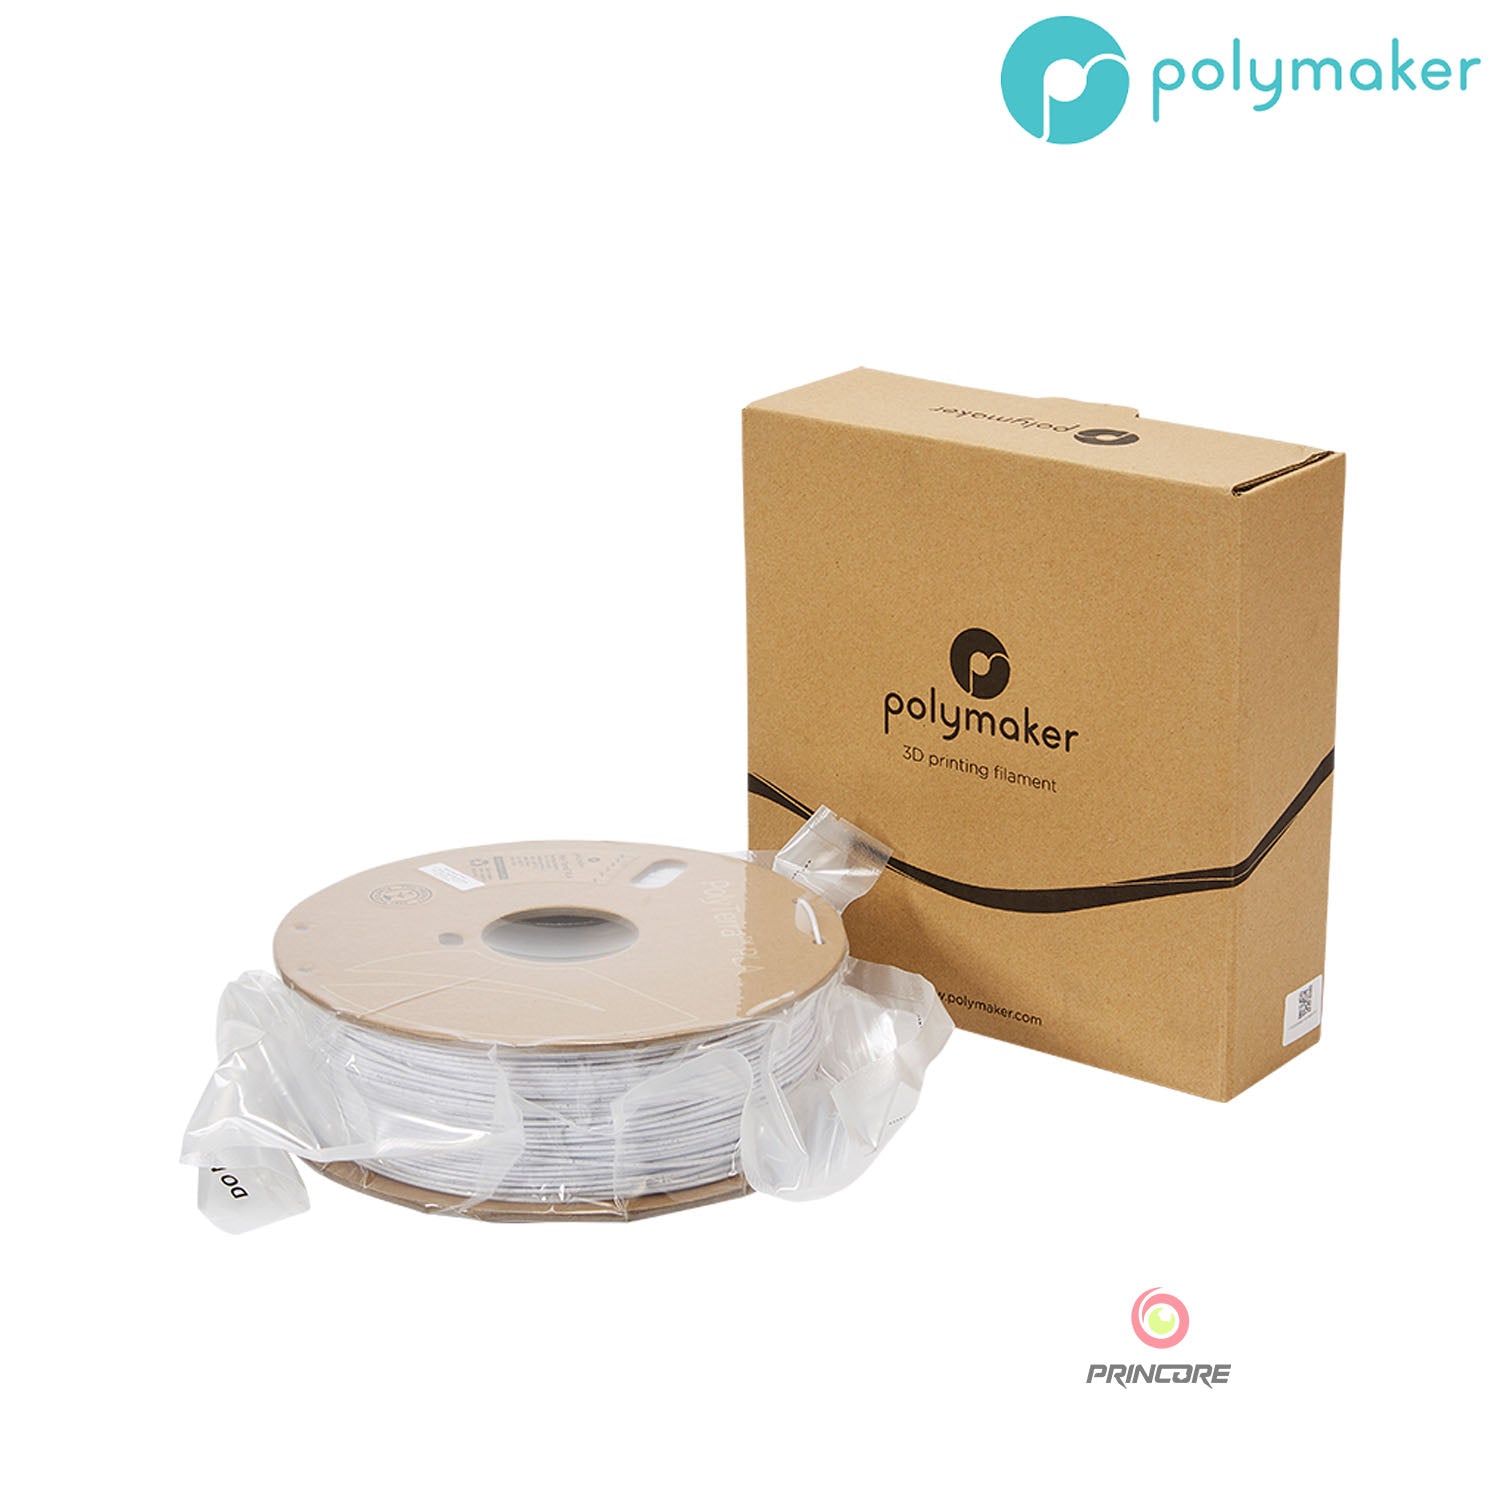 Polymaker PolyTerra™ PLA - Marble White [1.75mm] (19,90€/Kg)